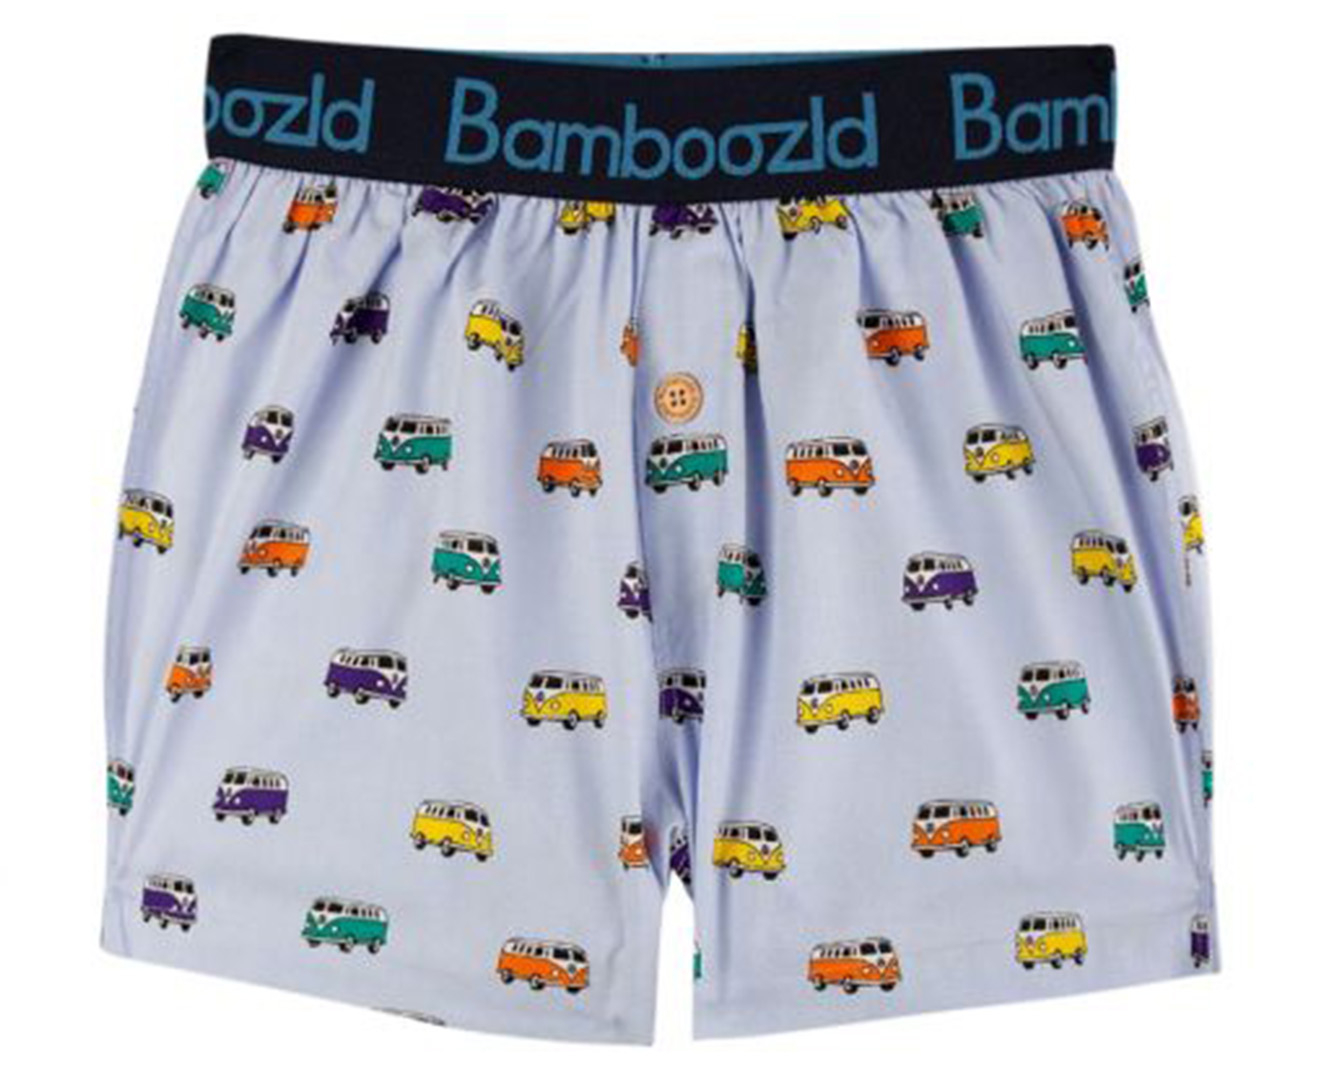 Bamboozld Men's Combi Bamboo Blend Boxer Shorts - Blue | Catch.com.au